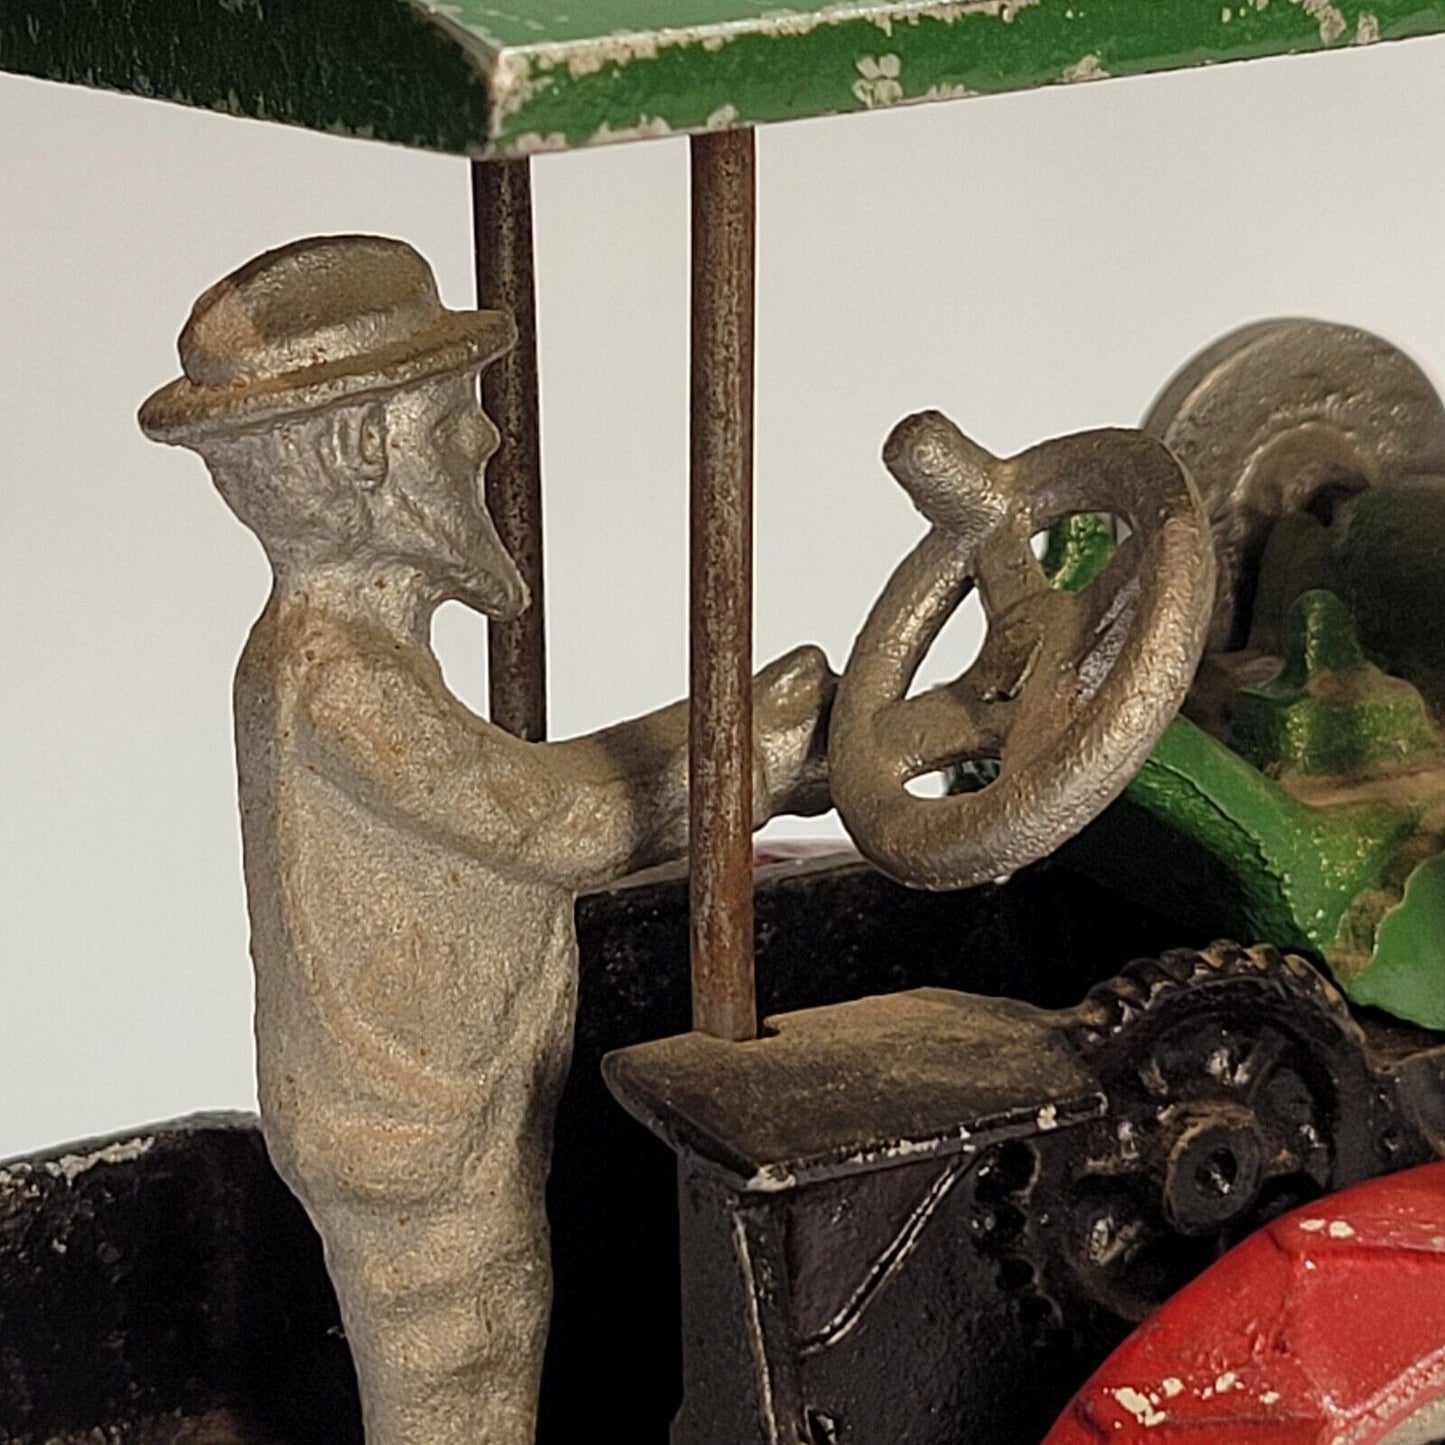 Vintage Irvin's Model Shop Aluminum Case Steam Powered Farm Tractor